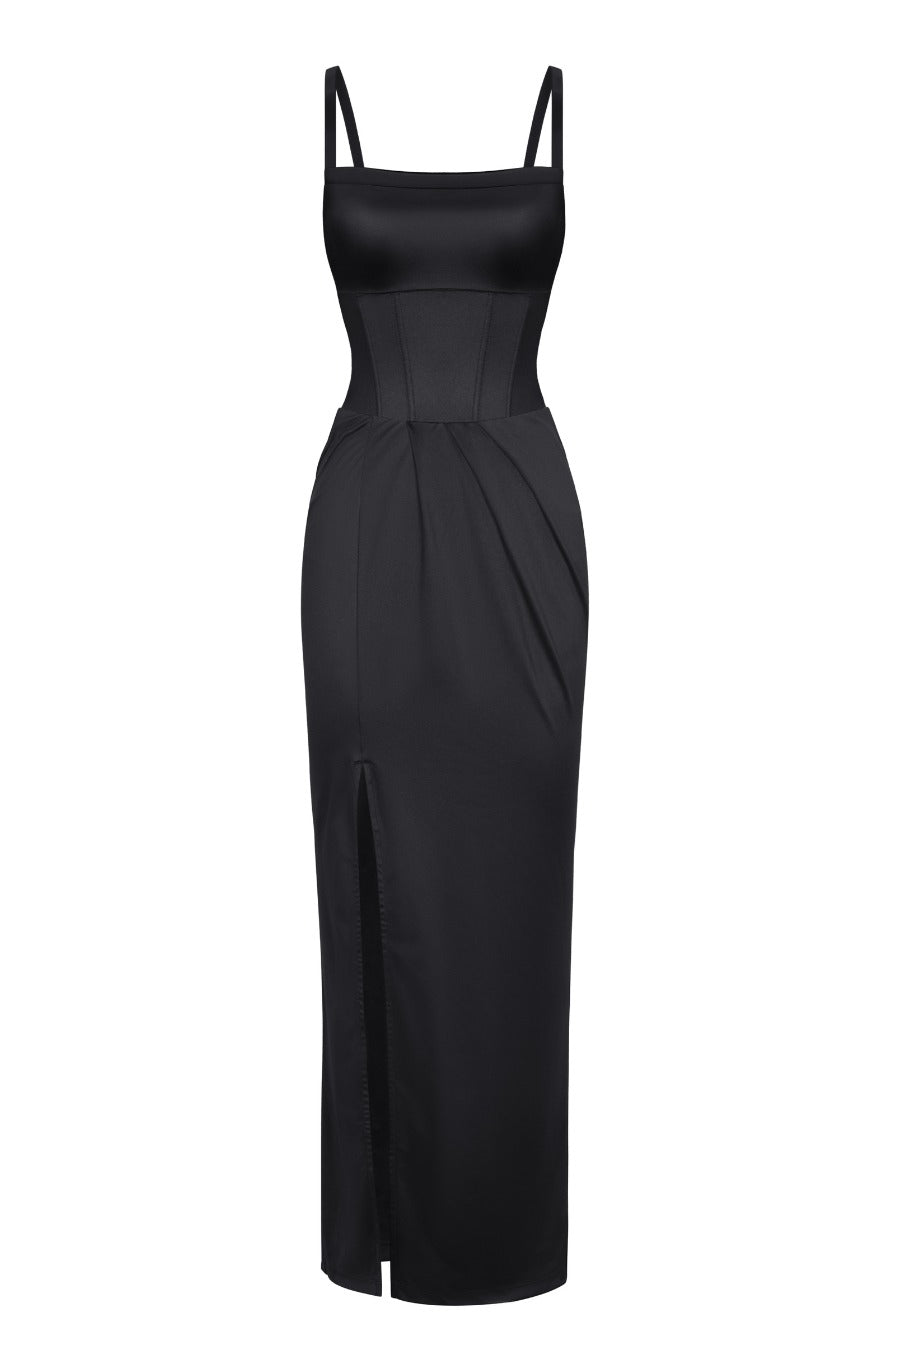 Ava Satin Skirt - Black Contour Clothing